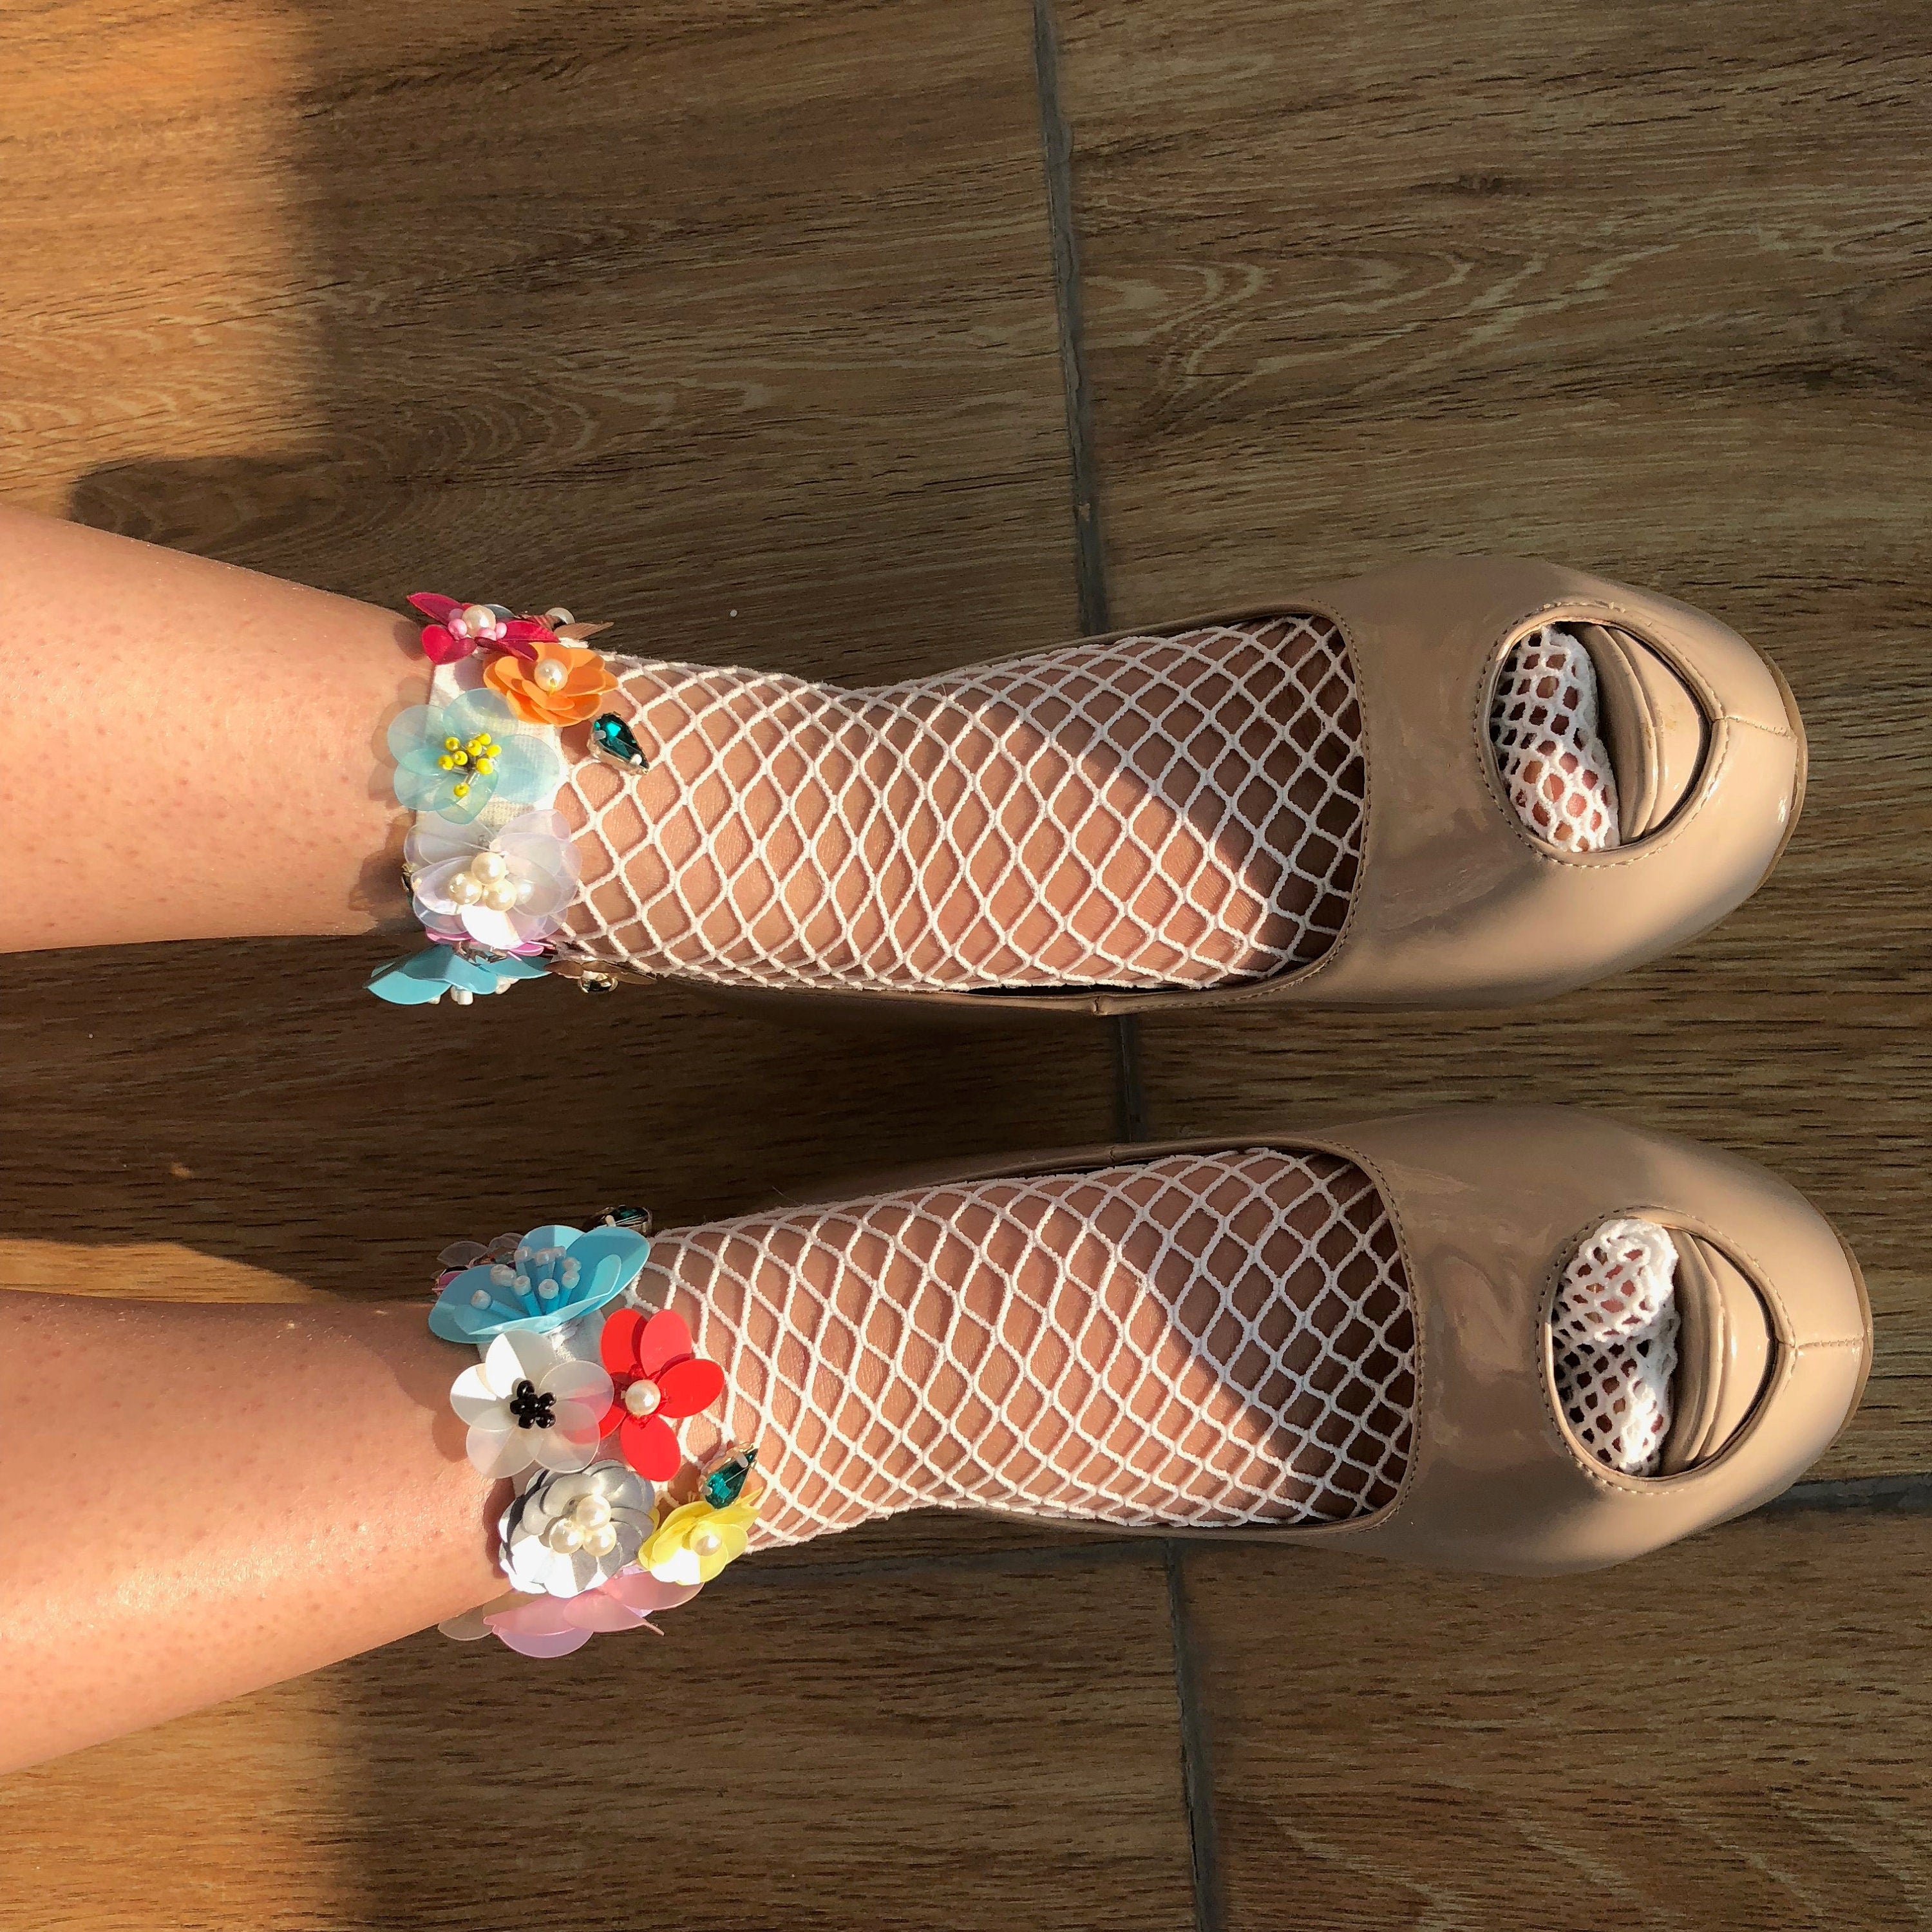 Mary Poppins Fishnet Socks